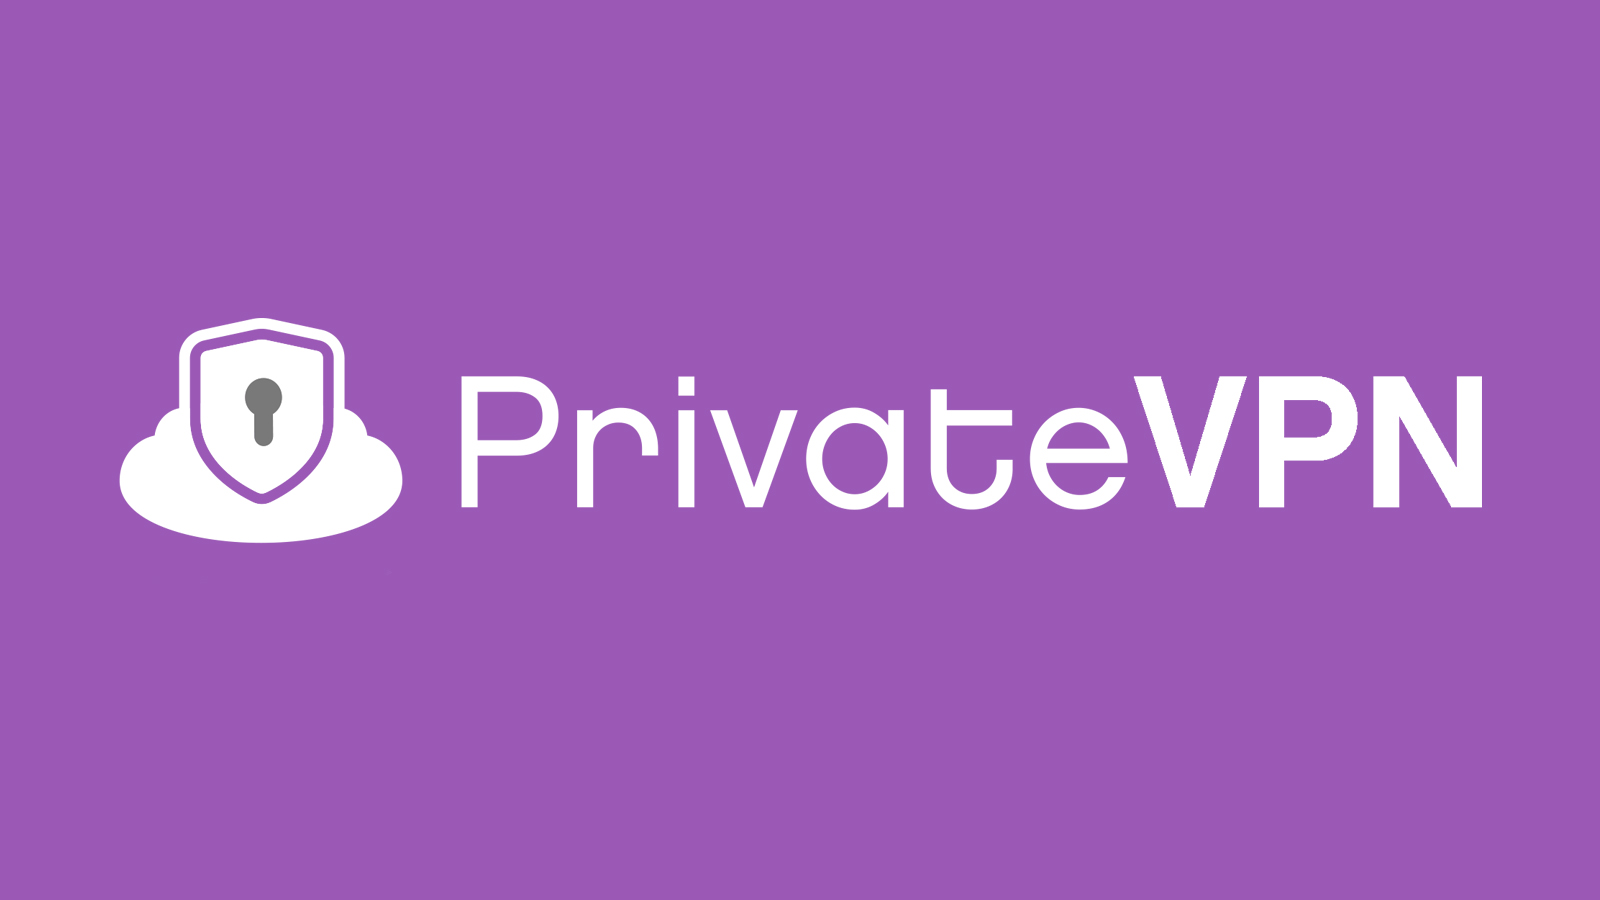 PrivateVPN for crypto trading